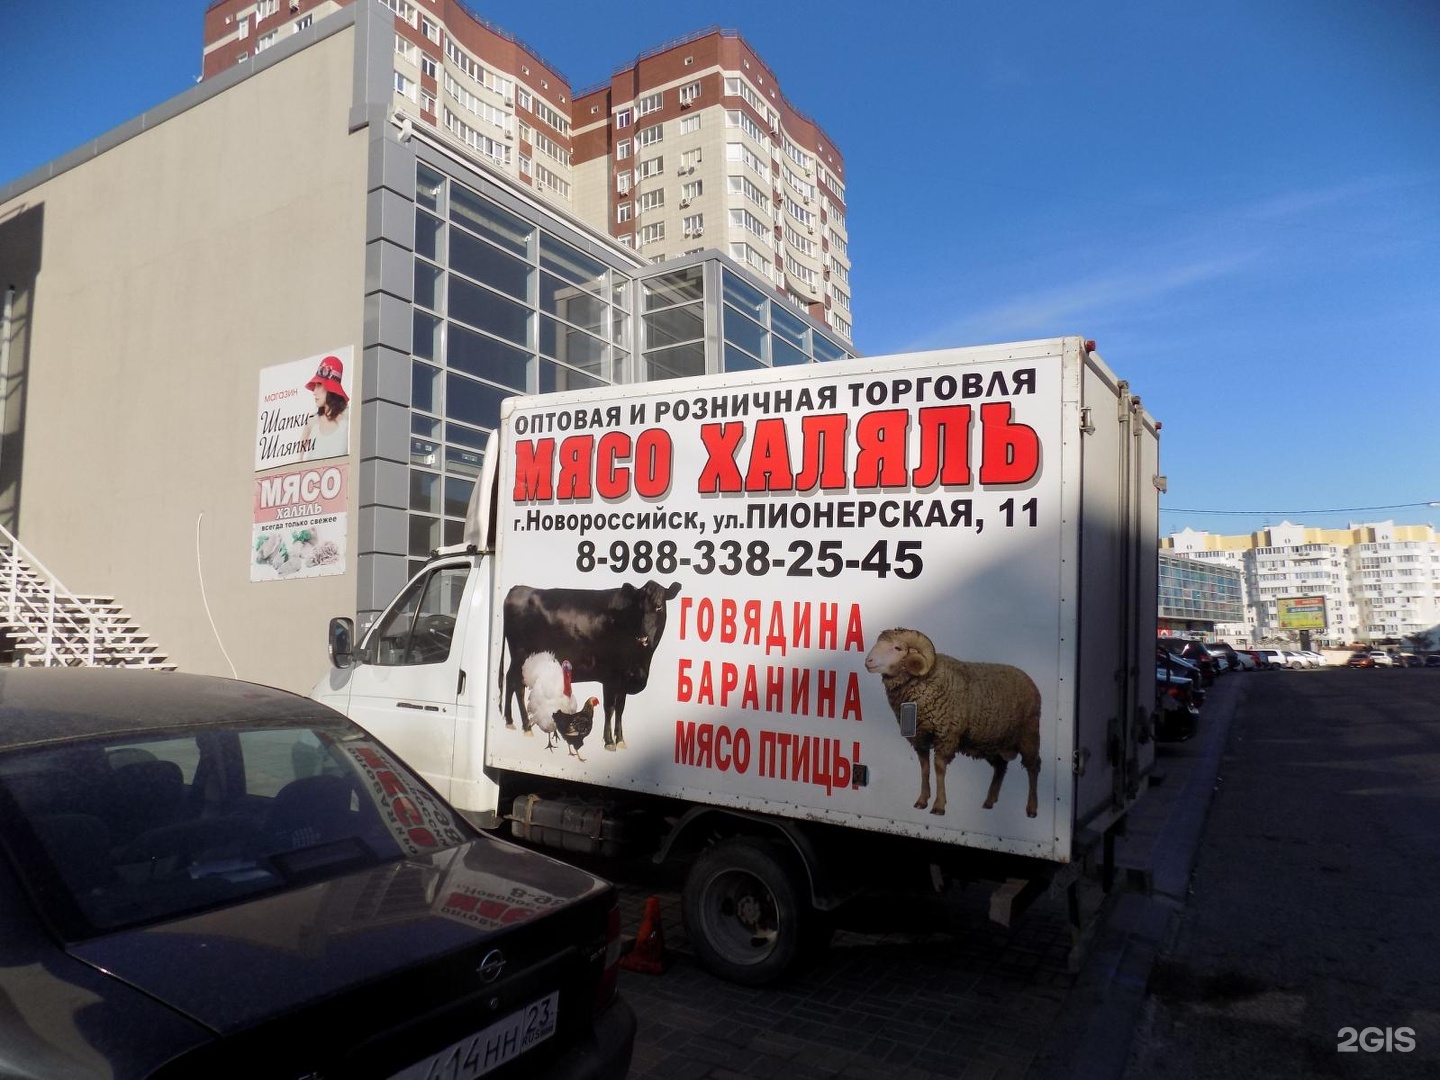 Реклама мясного магазина Халяль